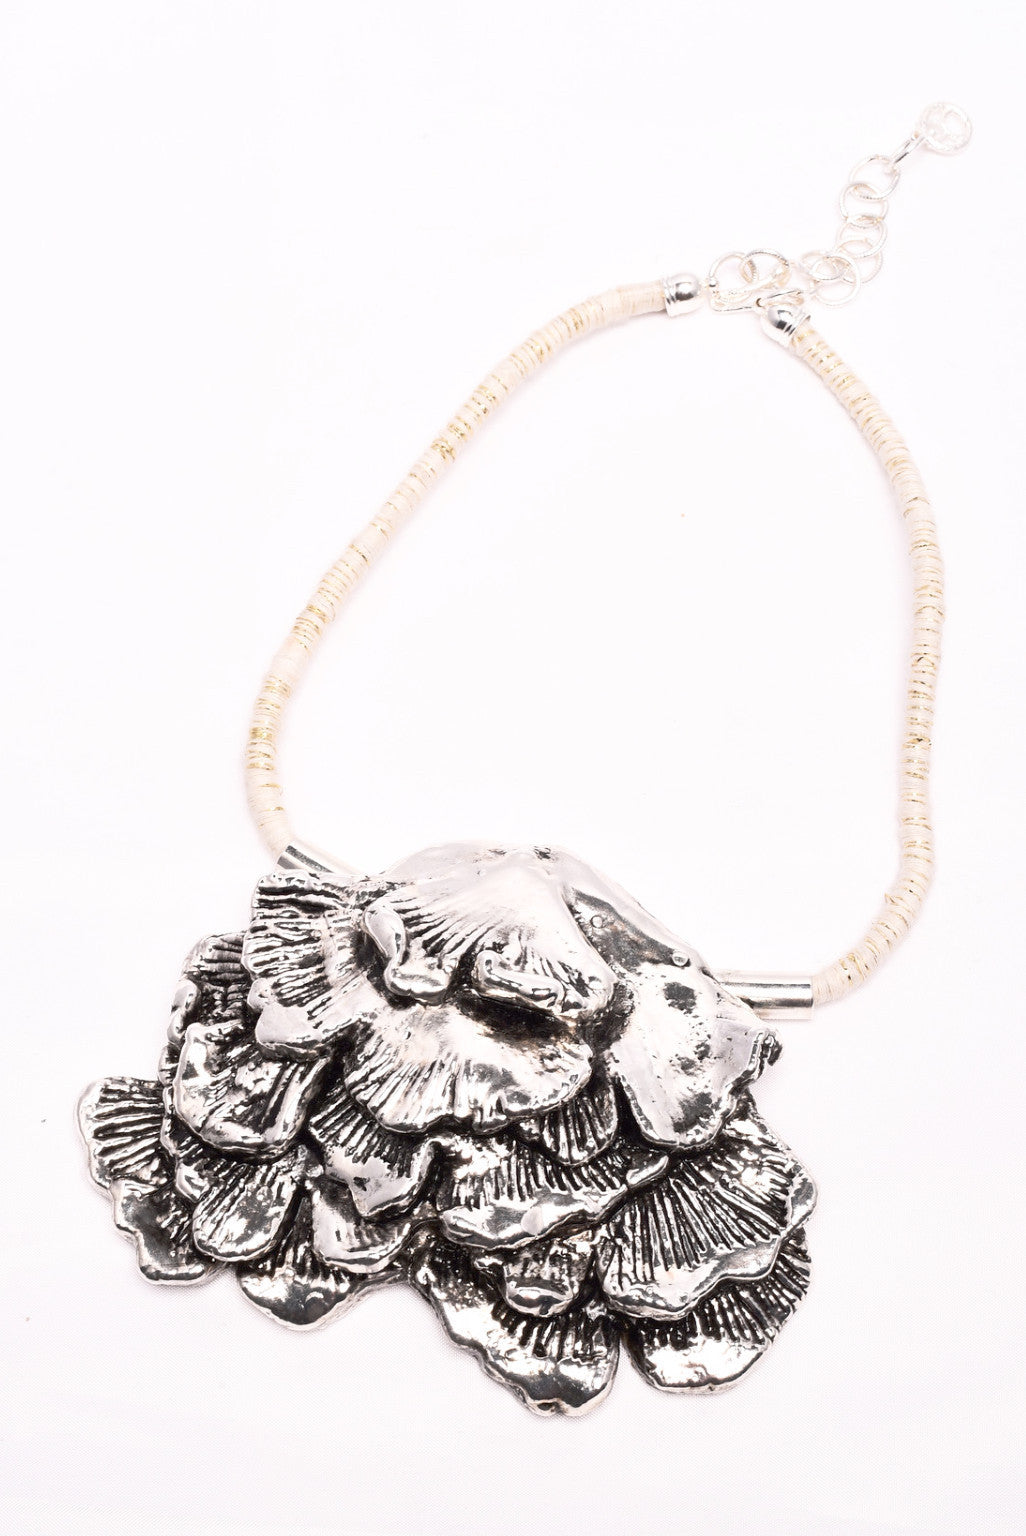 Seaweed necklace - Alexandra Koumba Designs